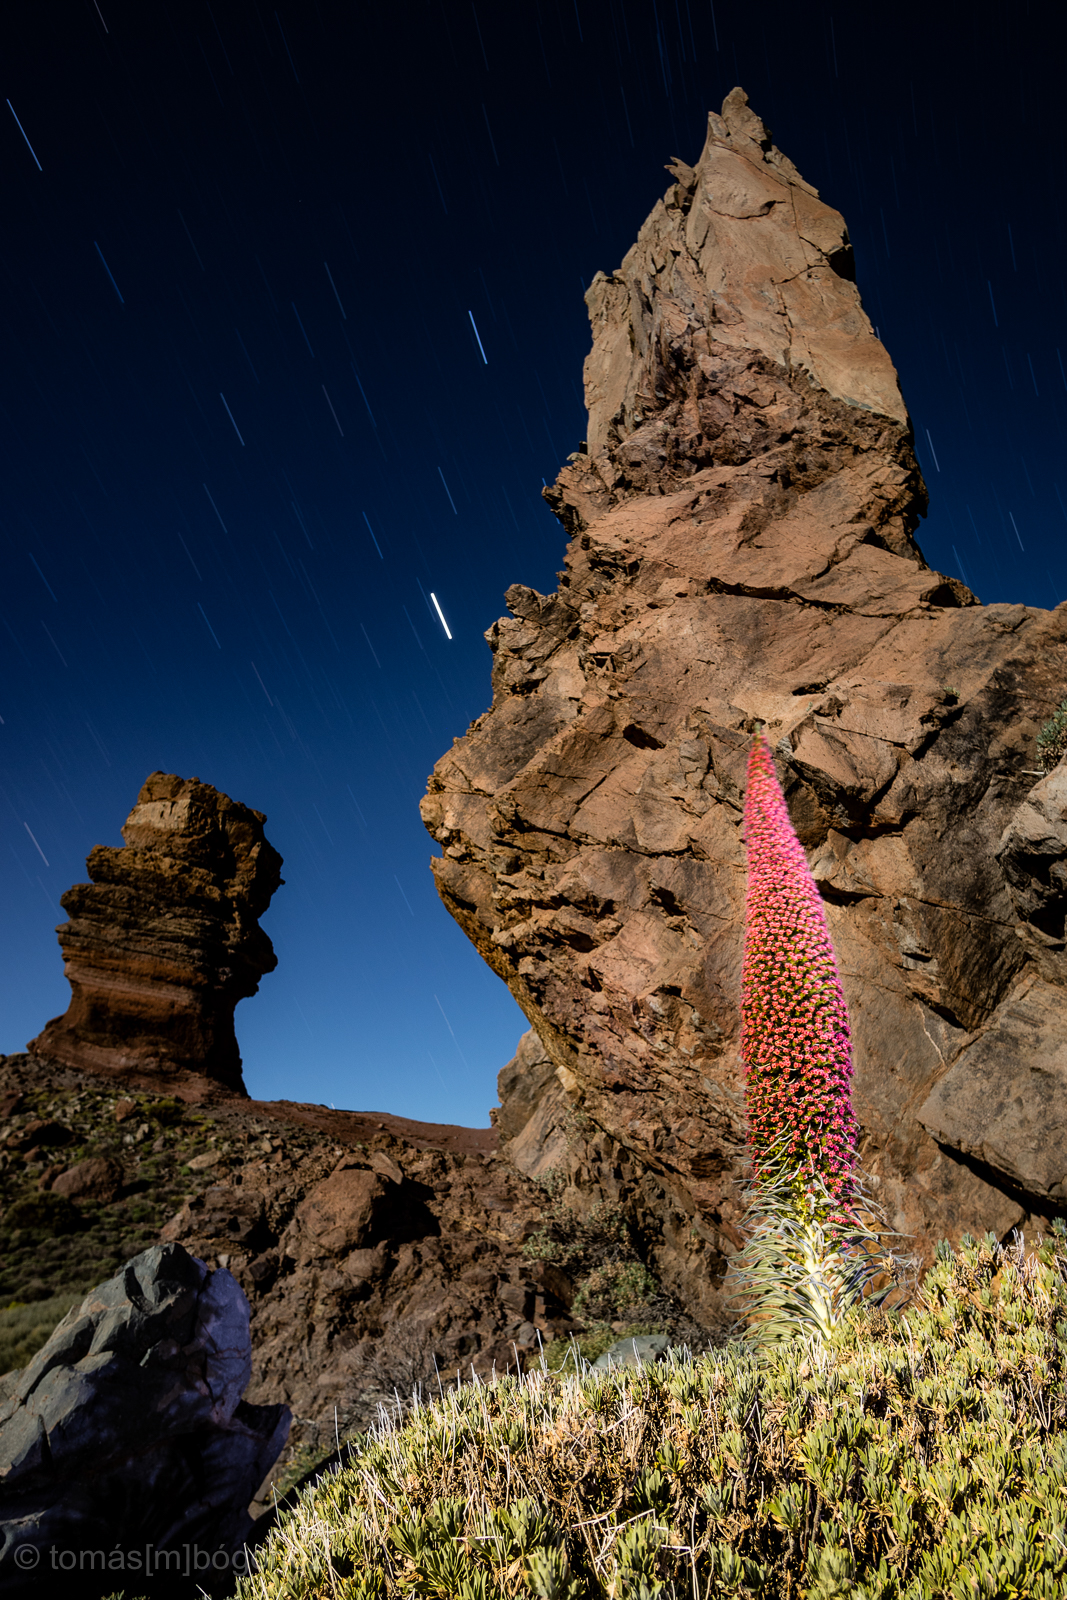 Adobe Portfolio Flowers night mountain National Park Tower Jewels Landscape moonlight red